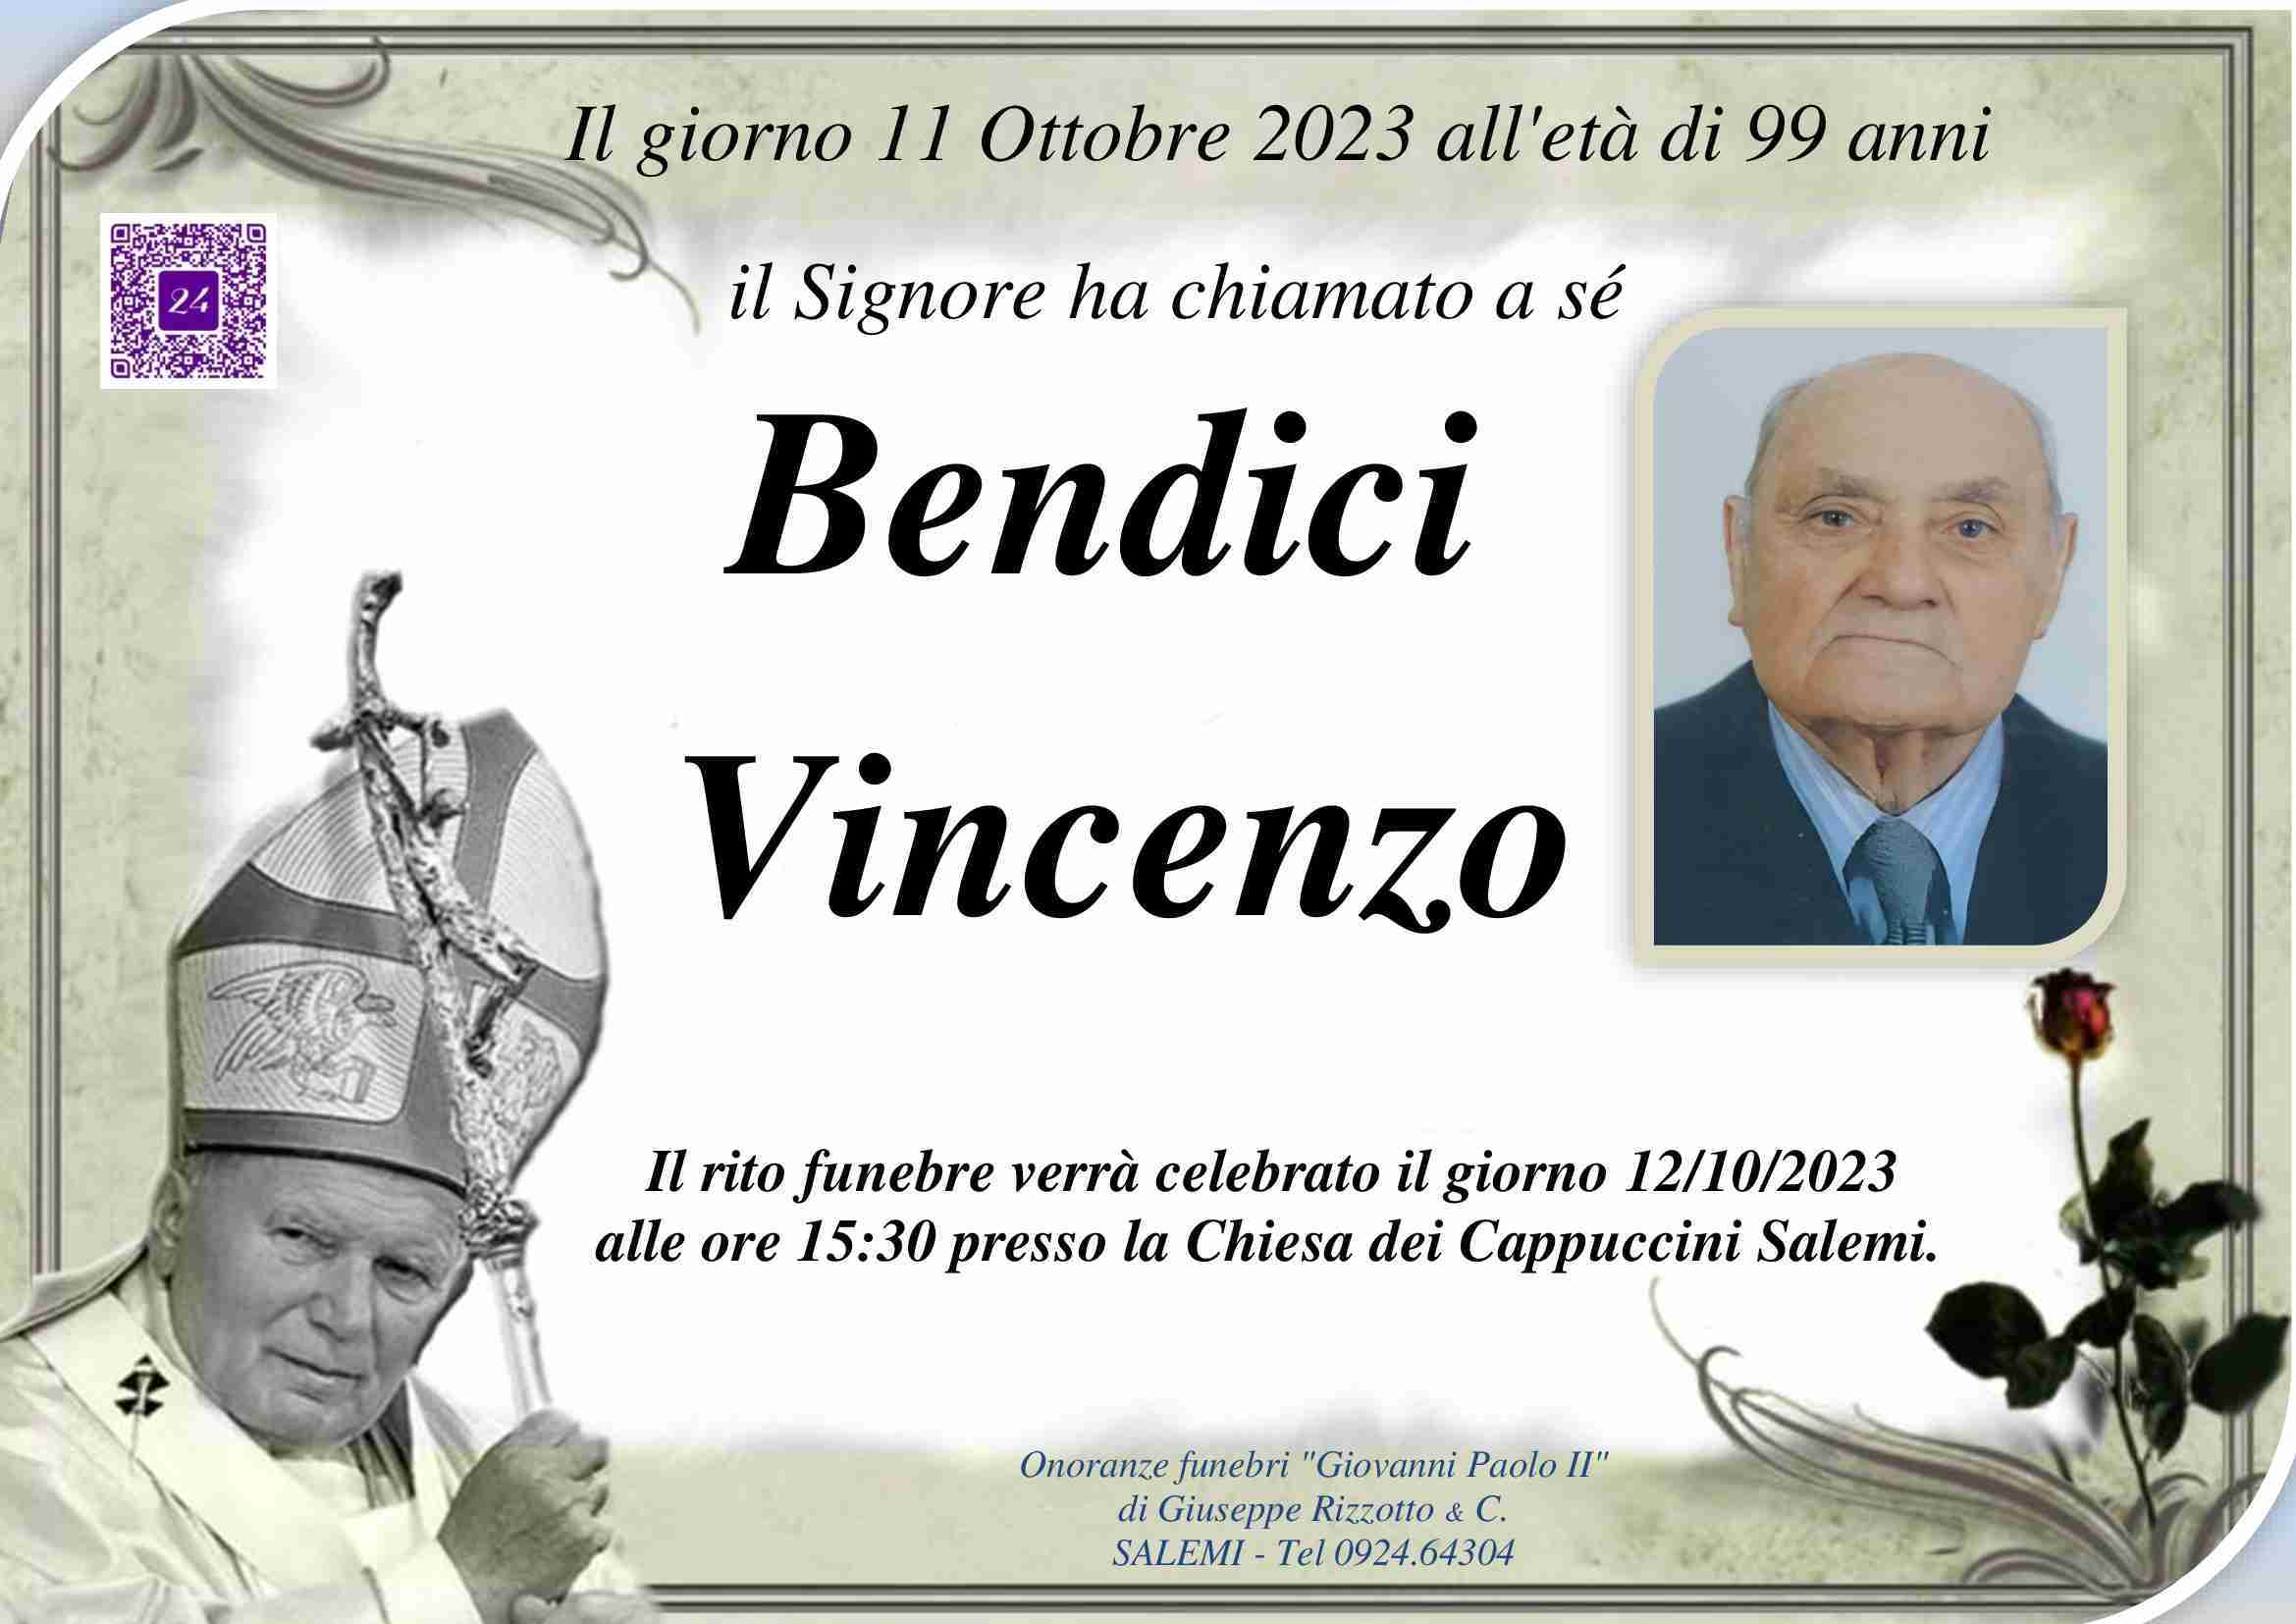 Vincenzo Bendici